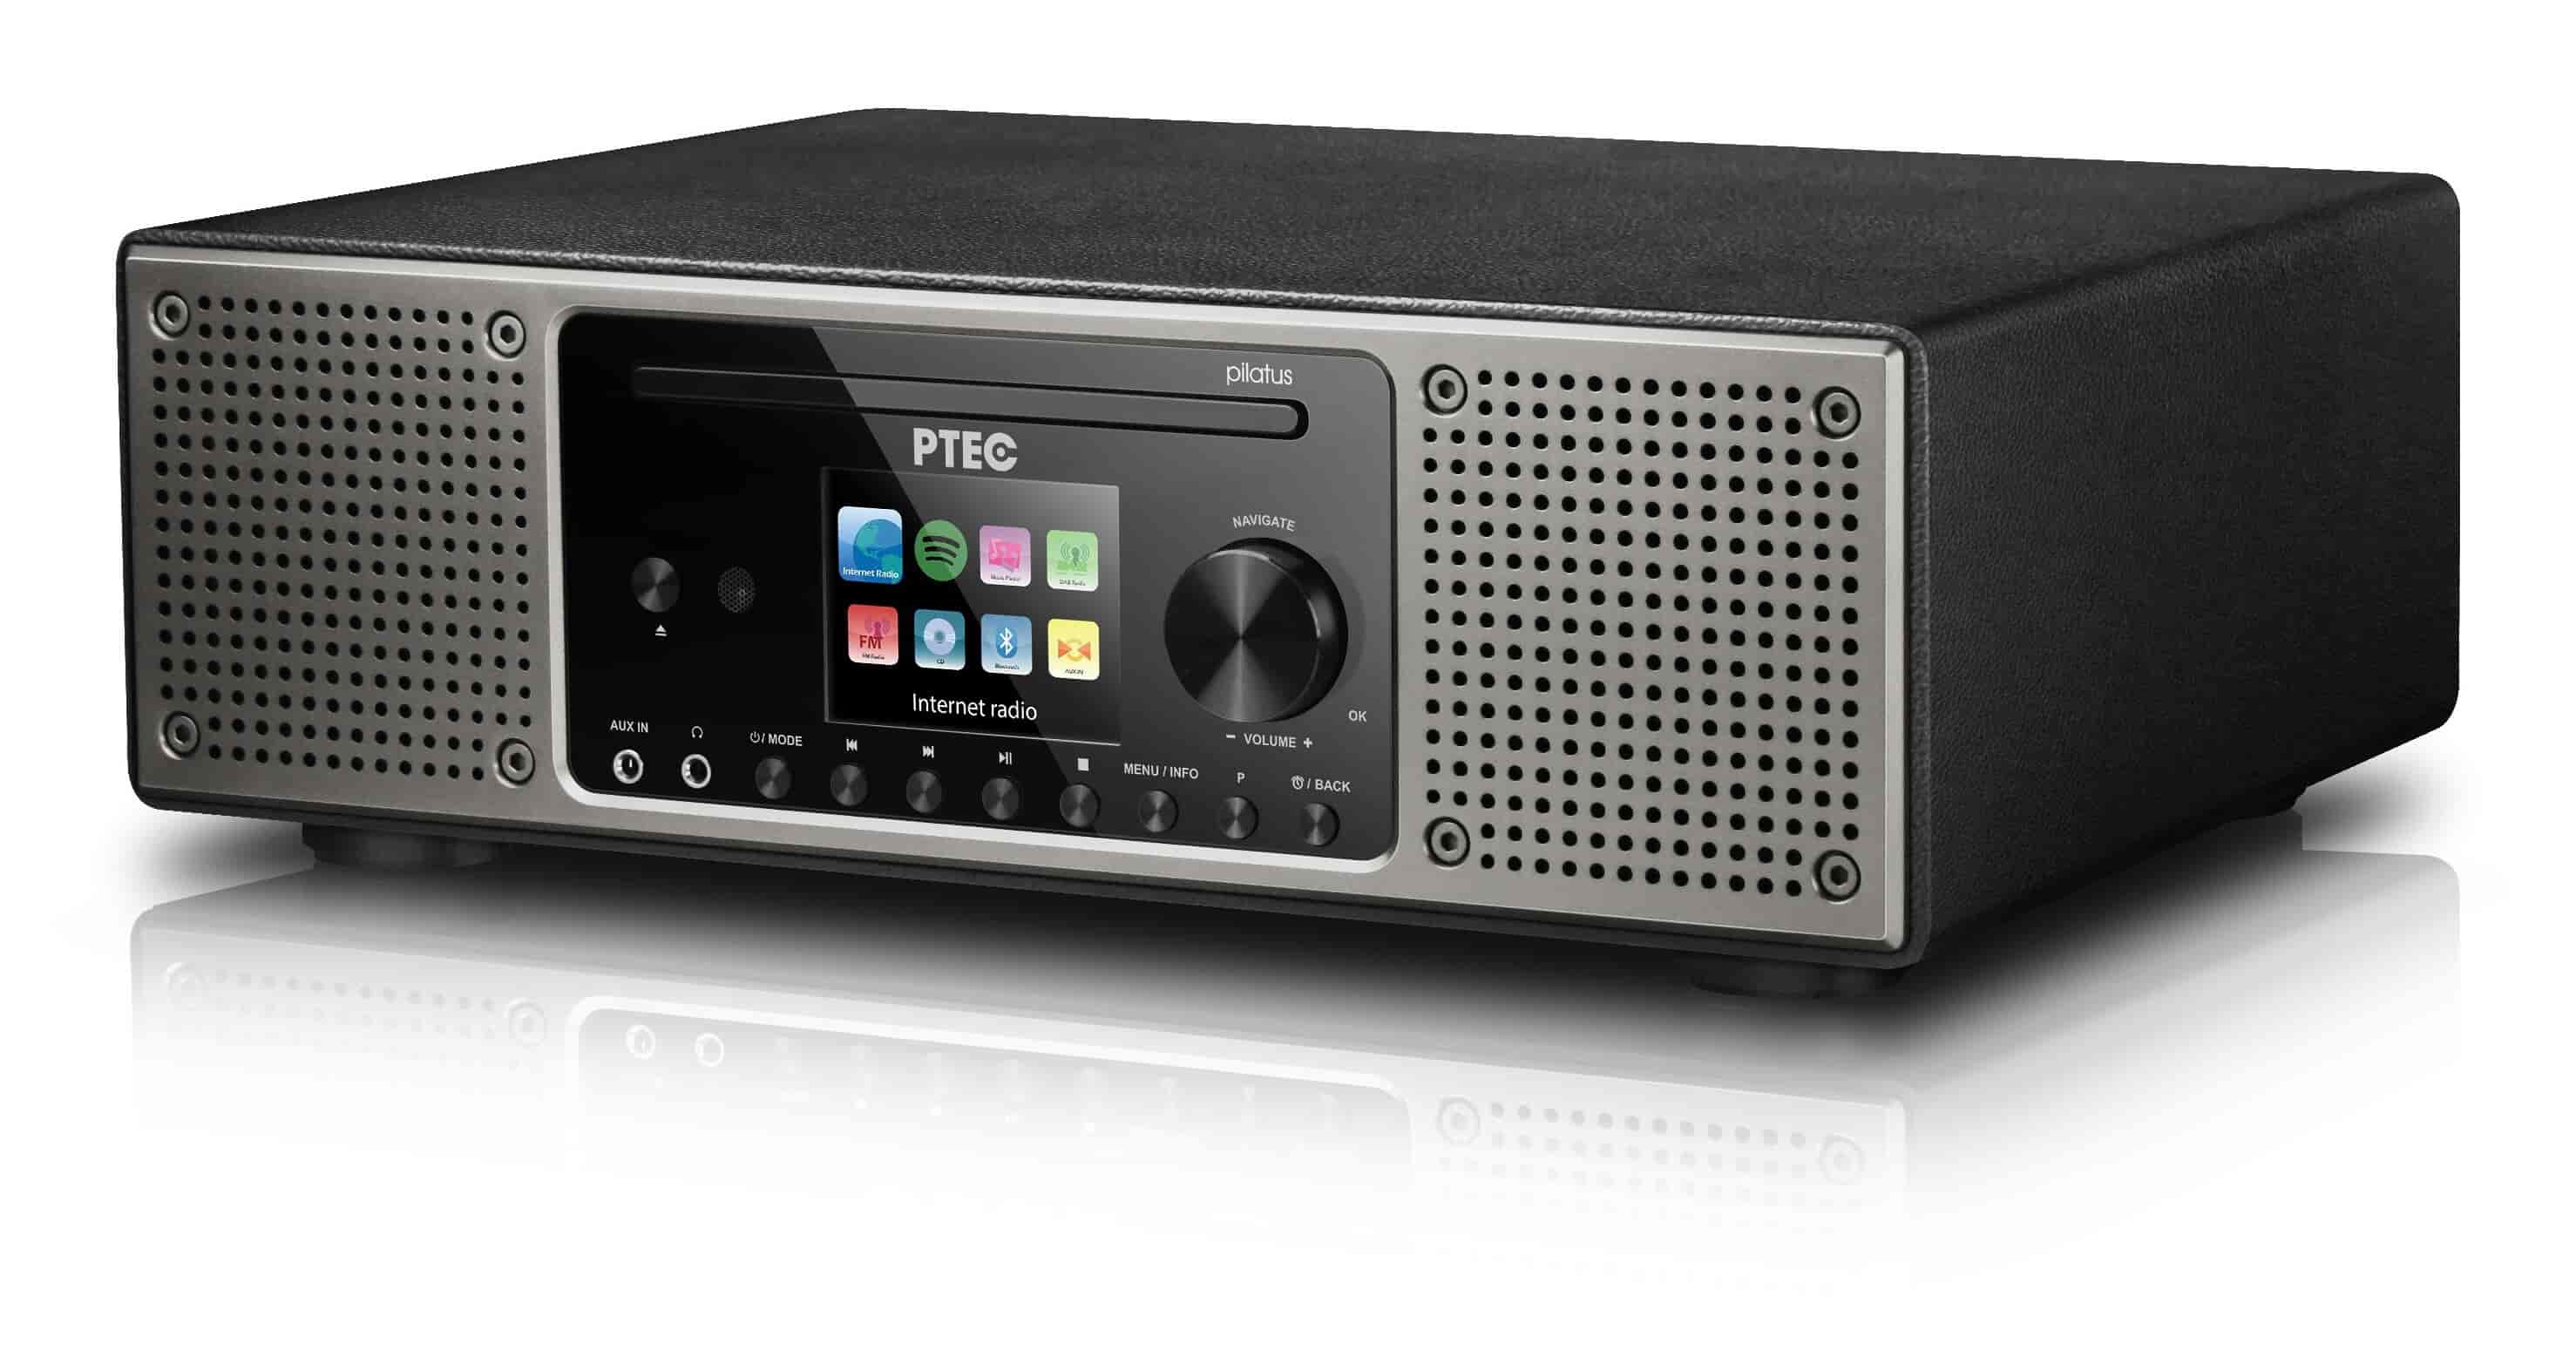 PTEC Pilatus II digital radio - DAB+, FM, MP3, CD, Internetradio, Spotify, UPnP, DLNA. Stor lyd-Lækkert design.